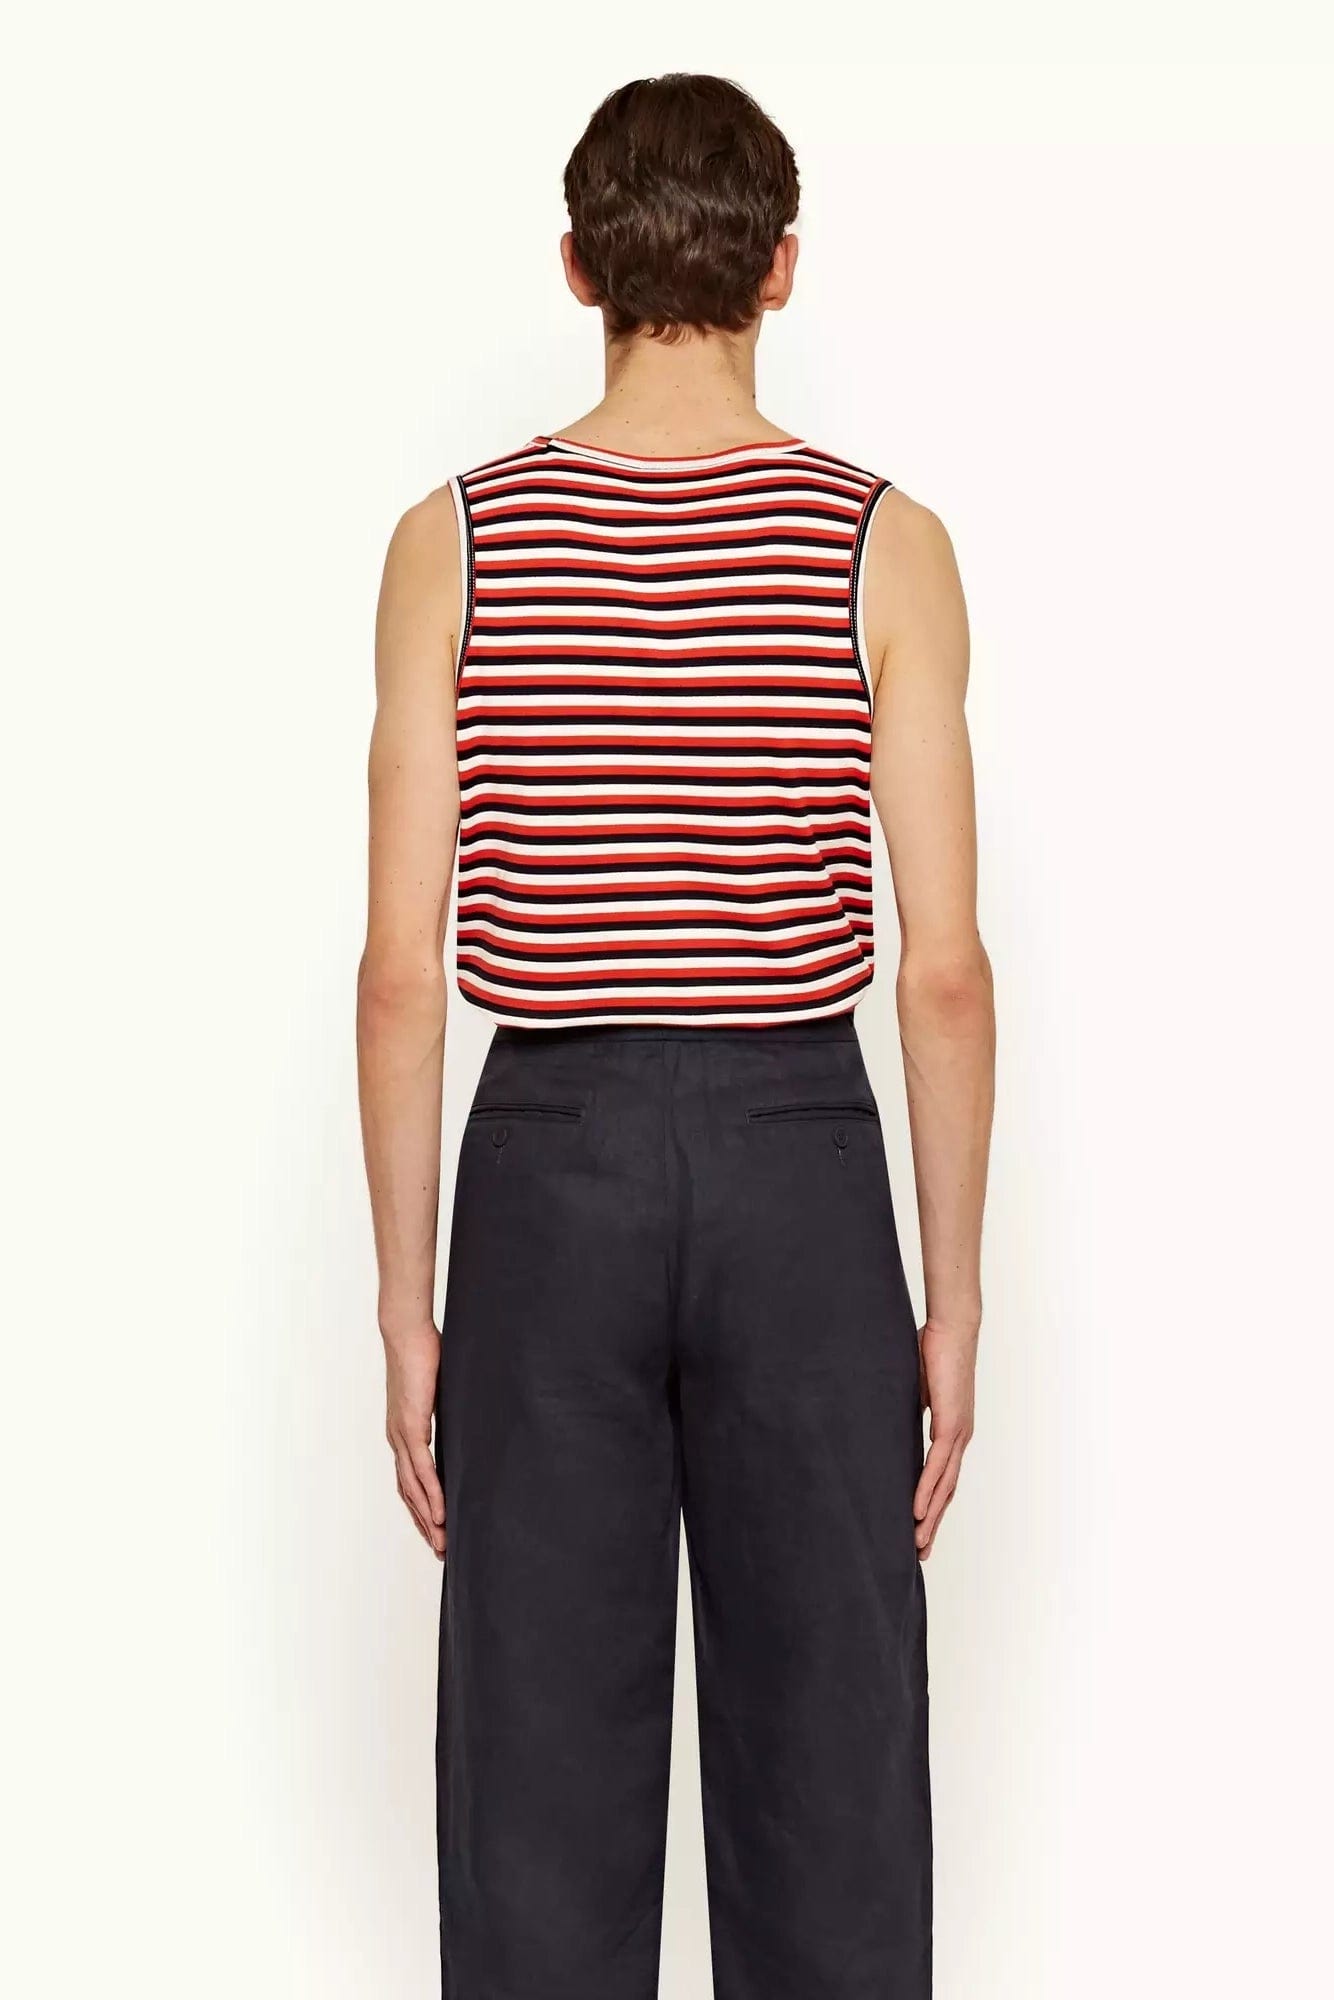 Striped Sleeveless Cotton Cherbury Tank Top T-Shirt MENSCLOTHINGSHIRT ORLEBAR BROWN   